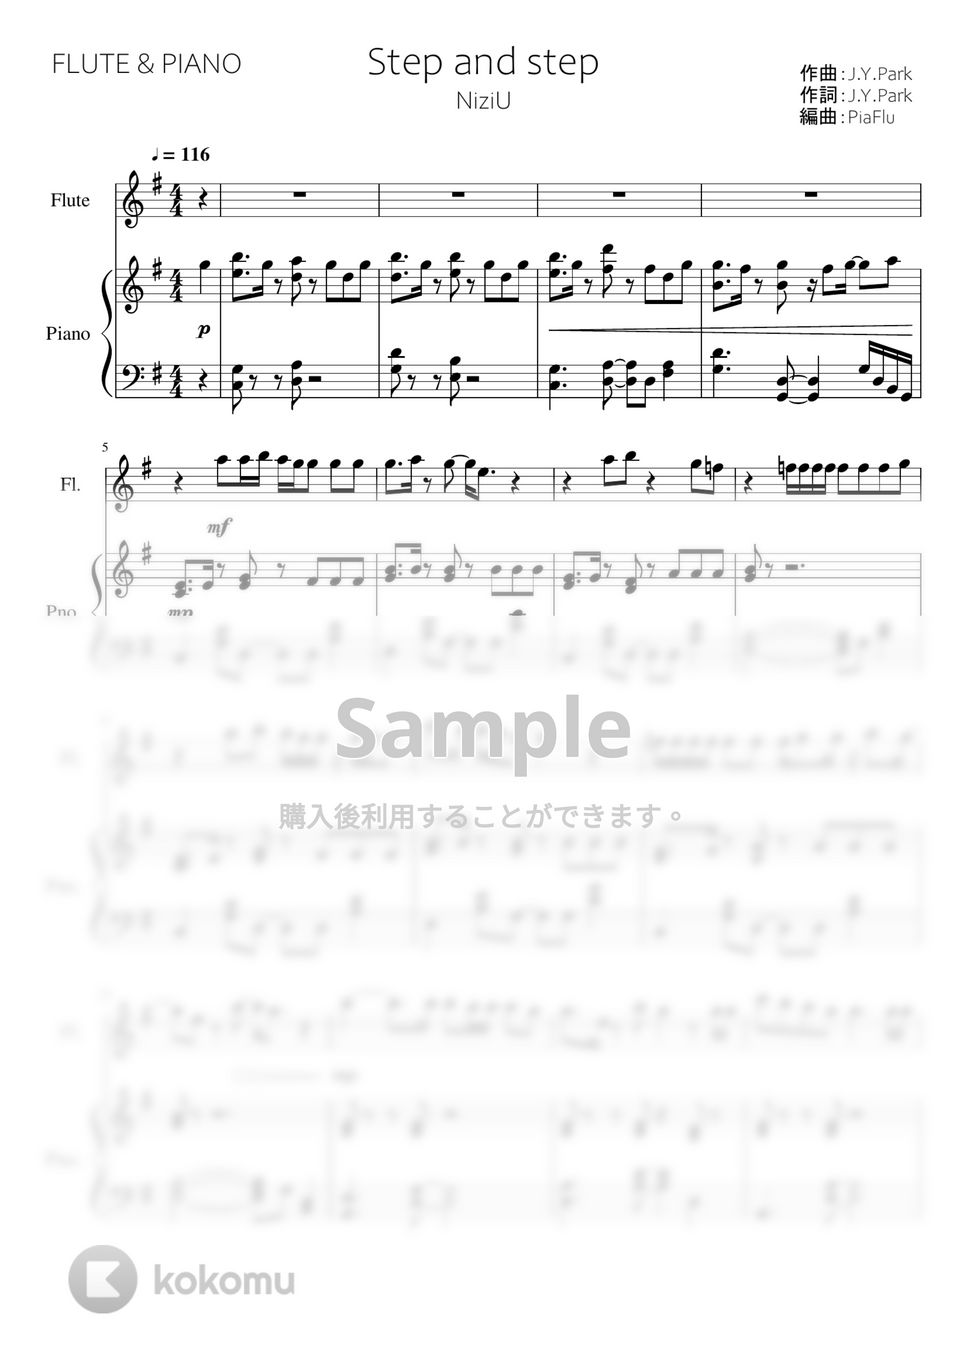 NiziU - Step and a step (フルート&ピアノ伴奏) by PiaFlu